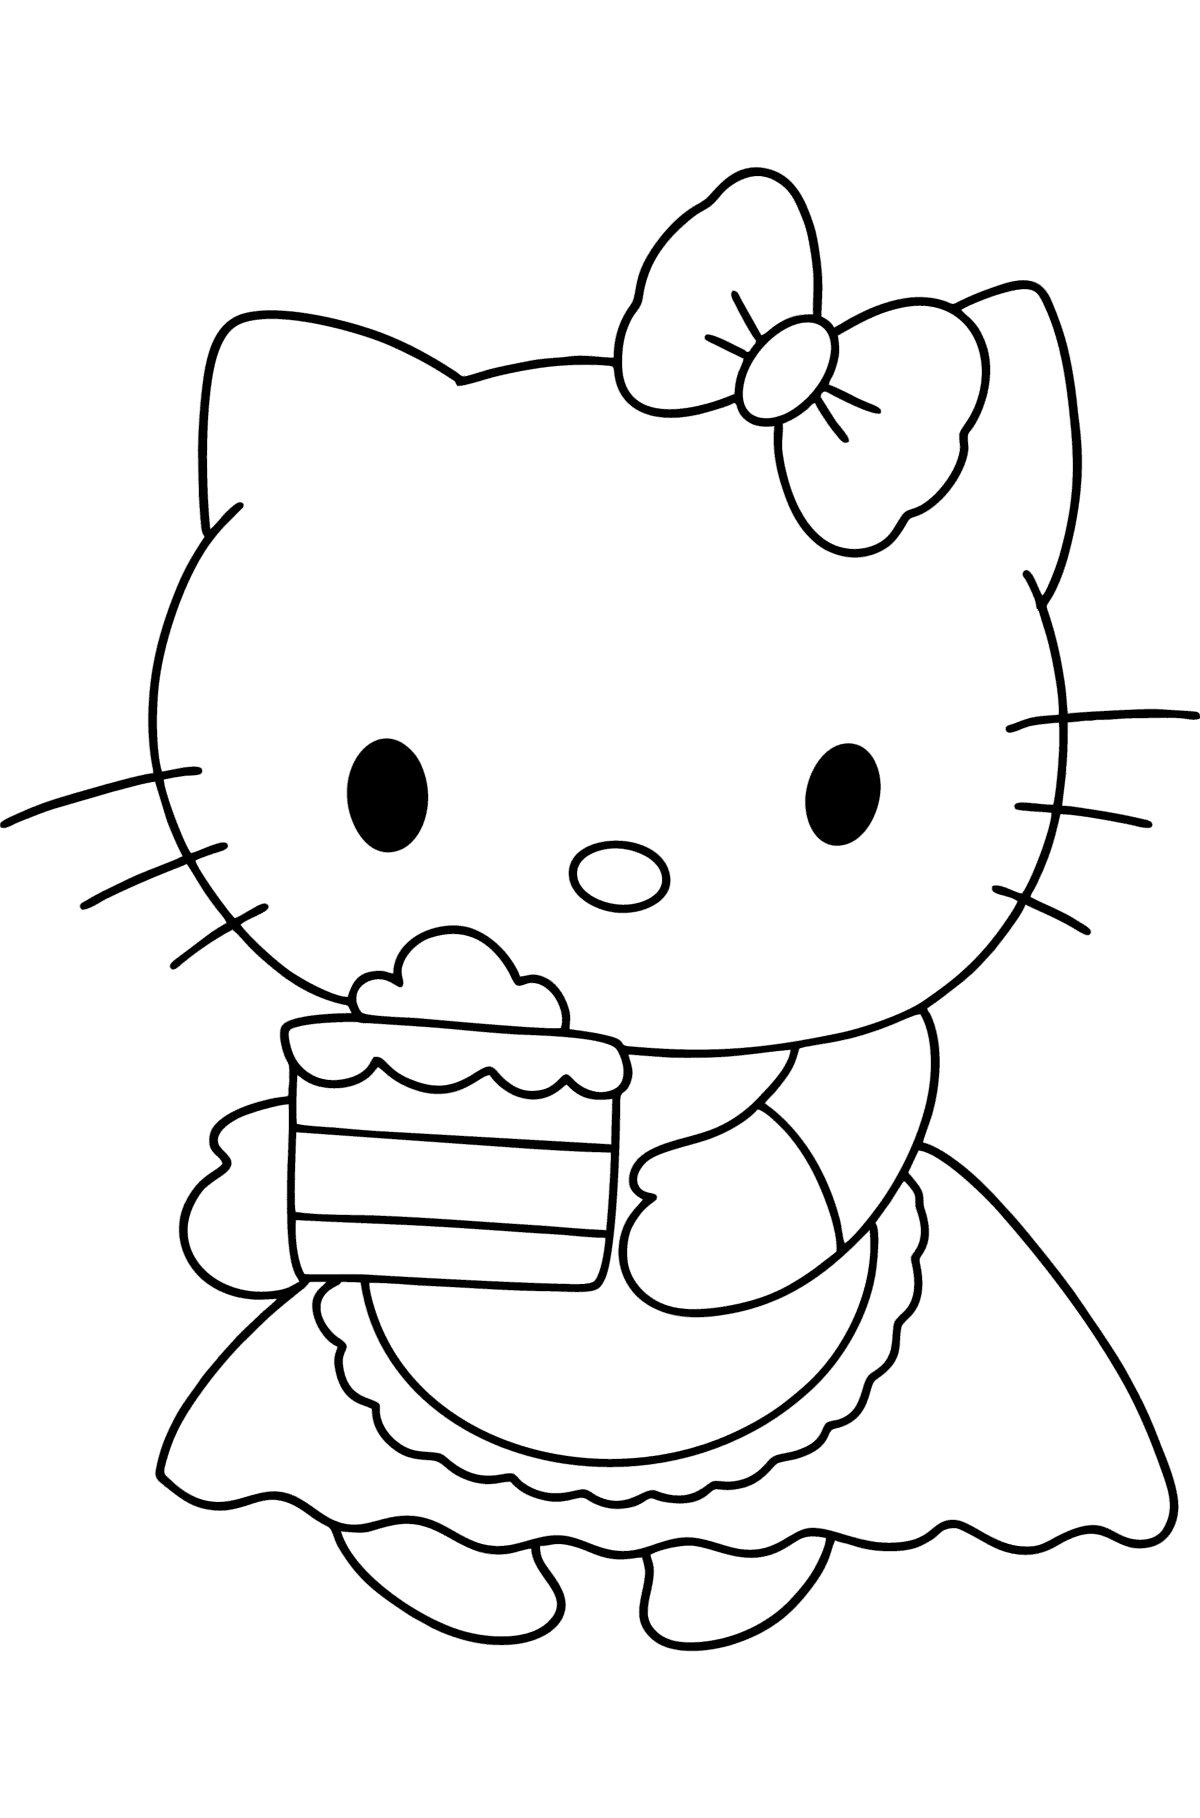 Раскраска Хелло Китти (Hello Kitty) и торт - Картинки для Детей